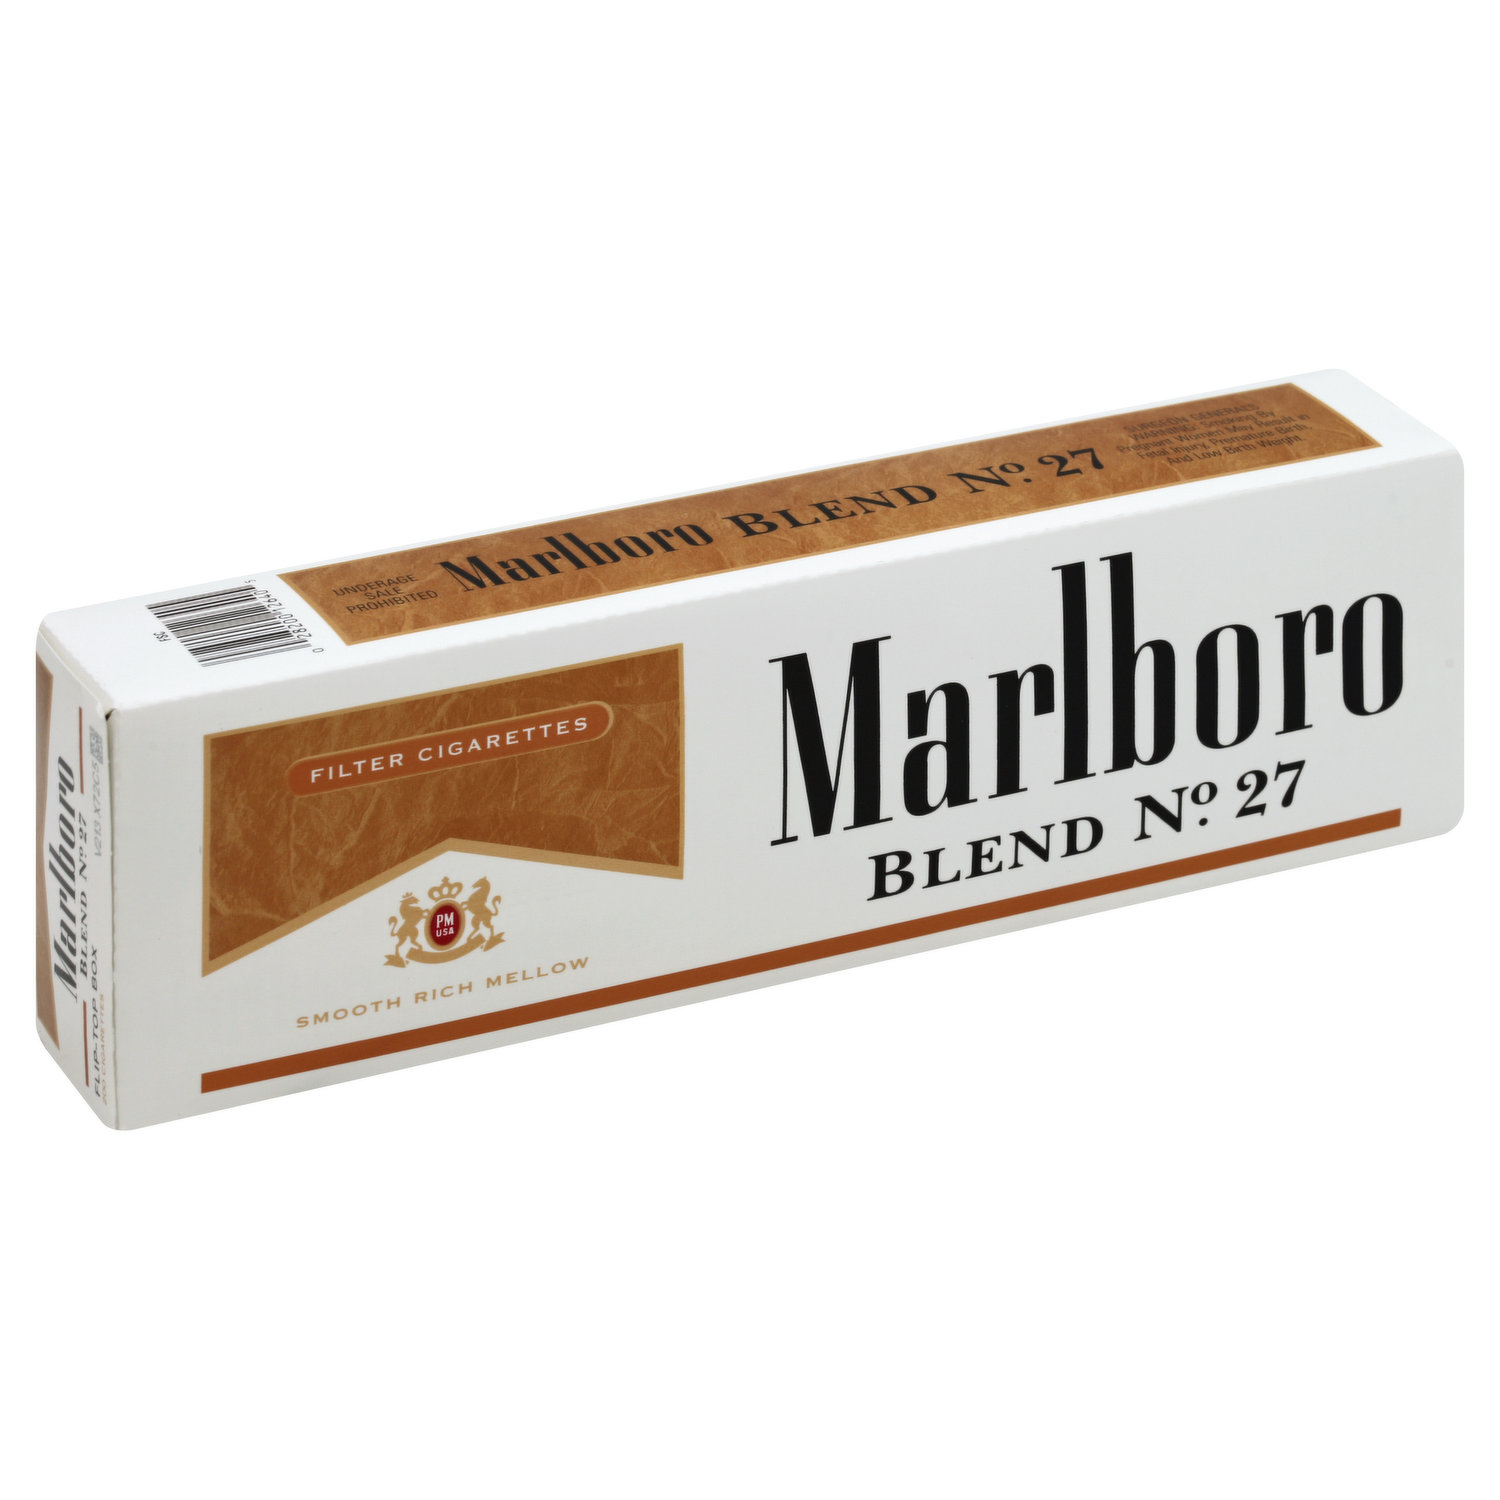 Marlboro Cigarettes, Silver Pack, Menthol, 100's